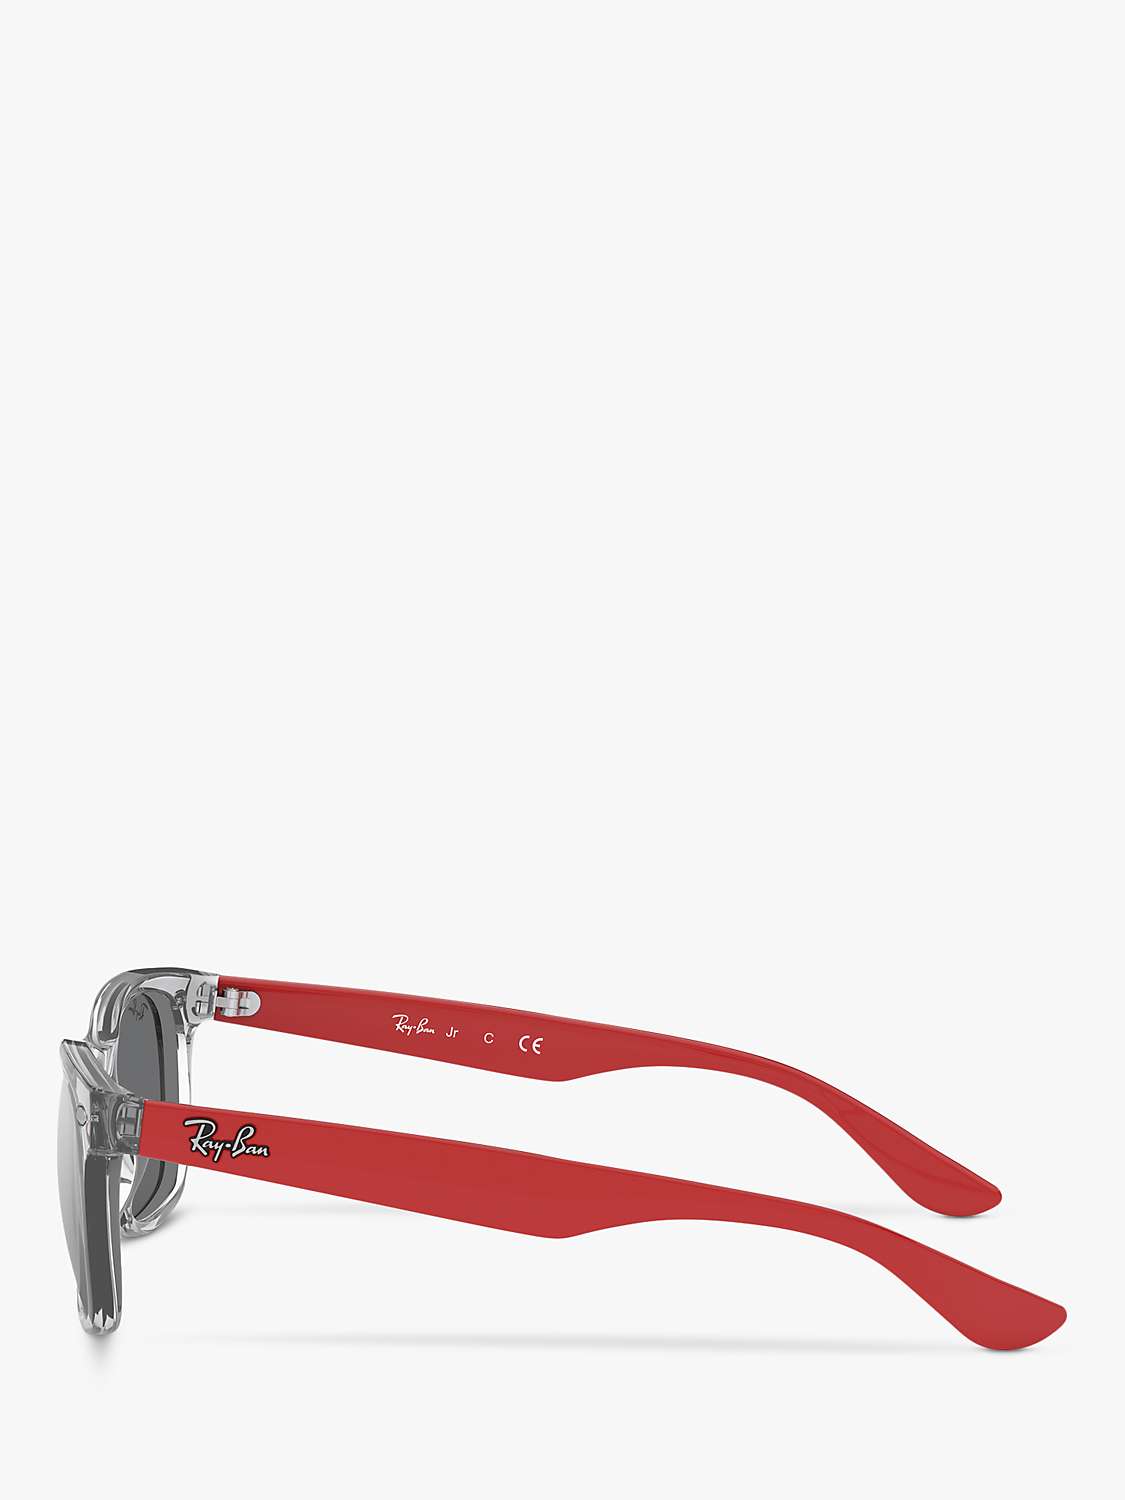 Buy Ray-Ban RJ9052S Unisex Square Sunglasses, Transparent Grey/Mirror Grey Online at johnlewis.com